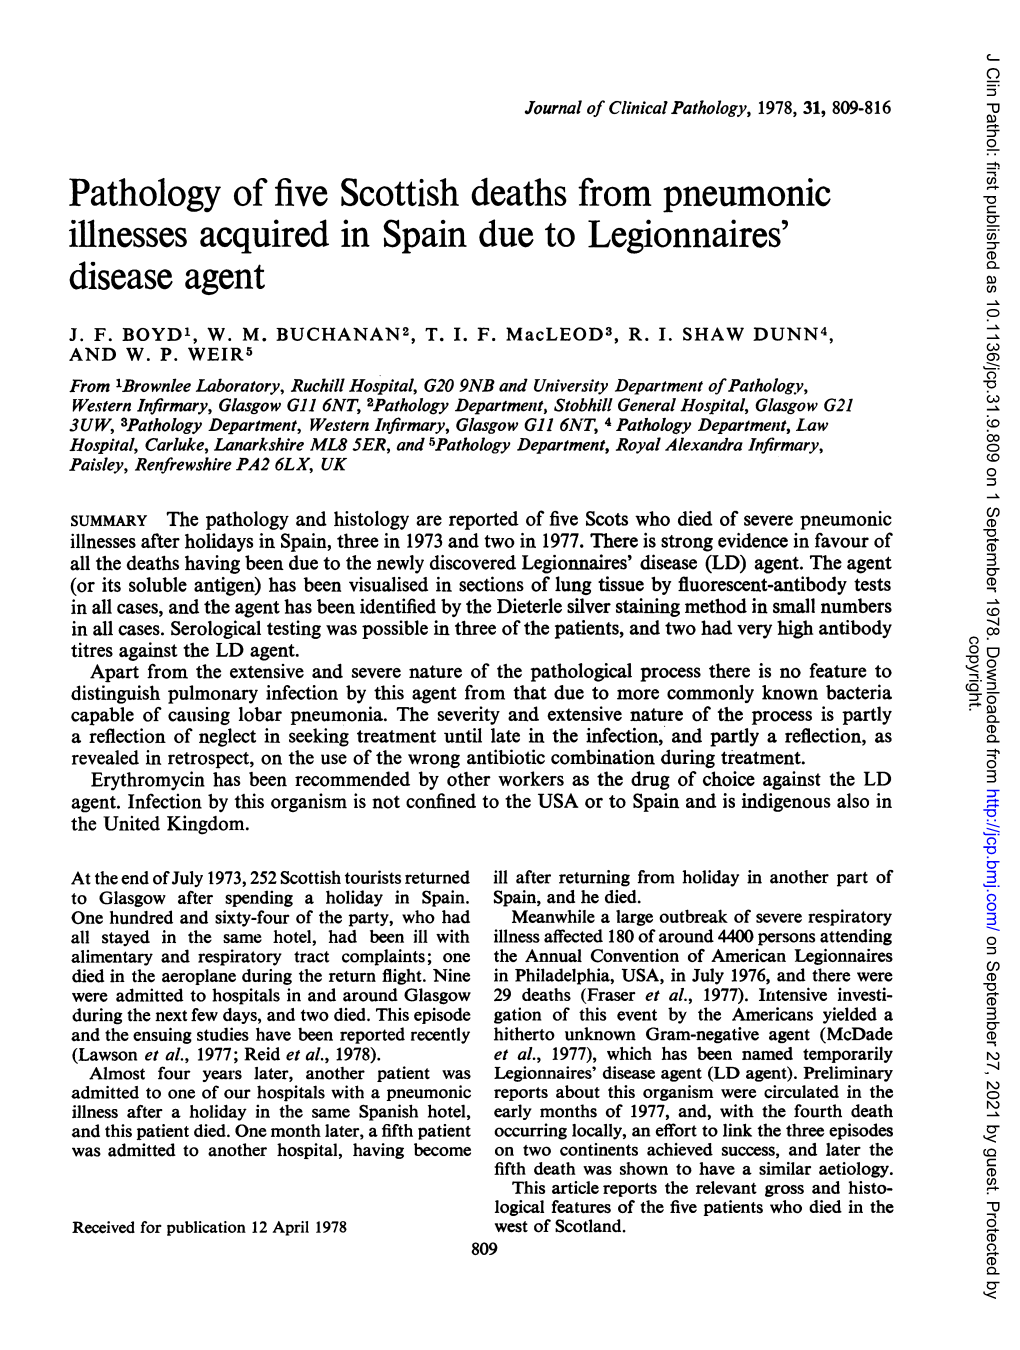 Pathology of Five Scottish Deaths from Pneumonic Disease Agent